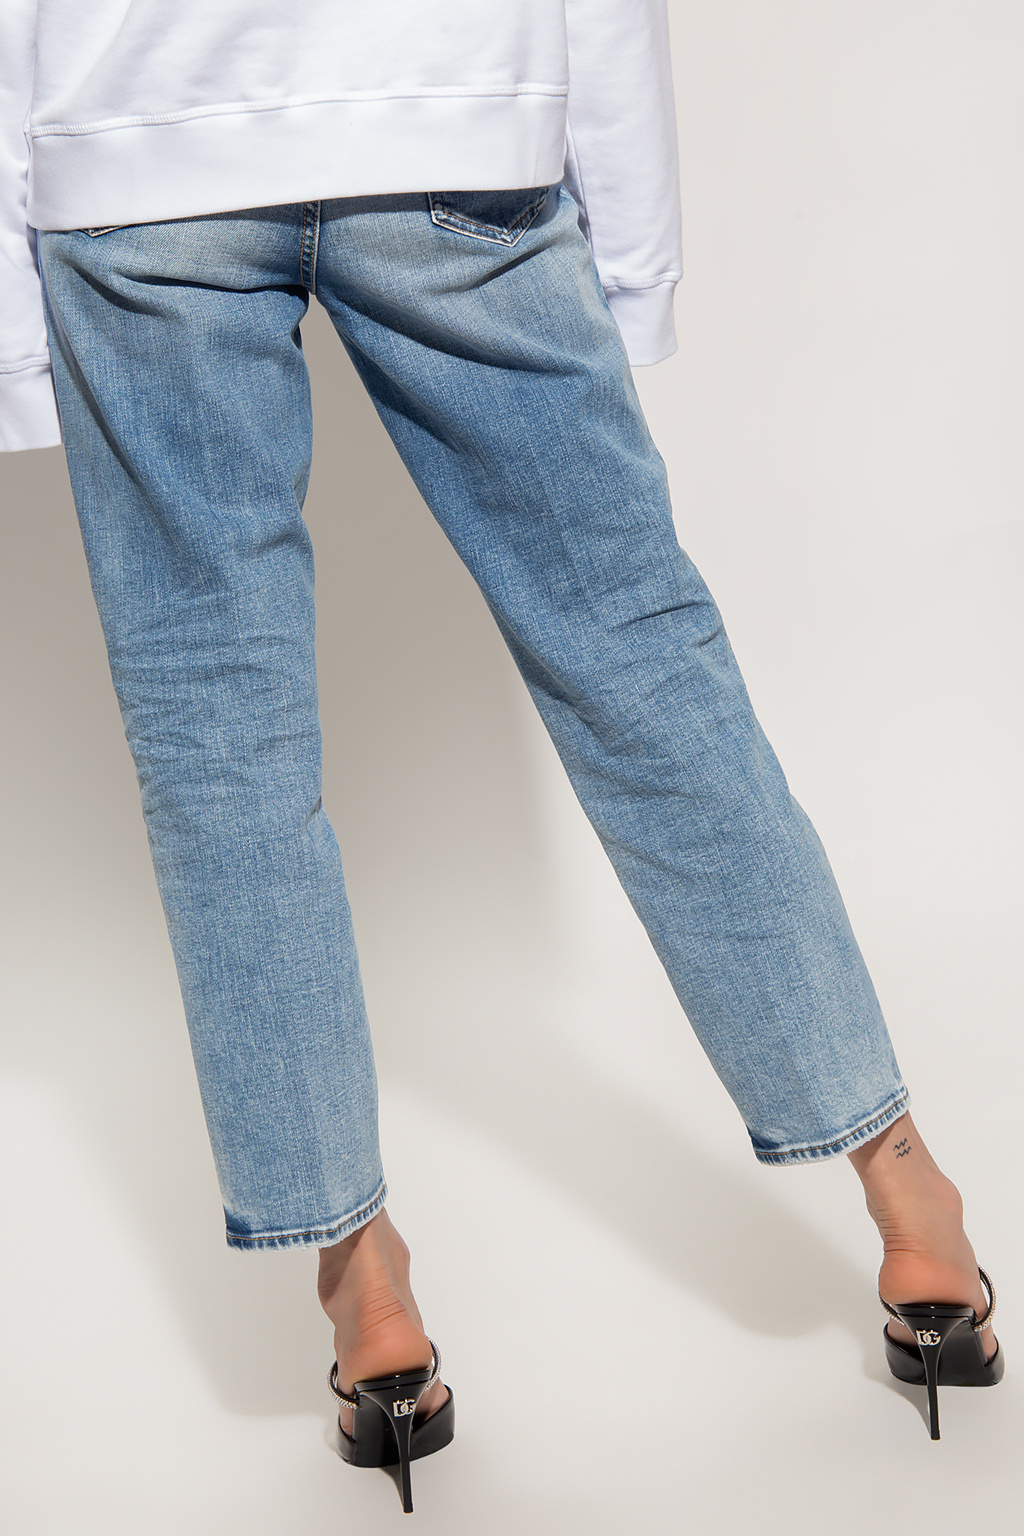 Dsquared2 Boston’ jeans